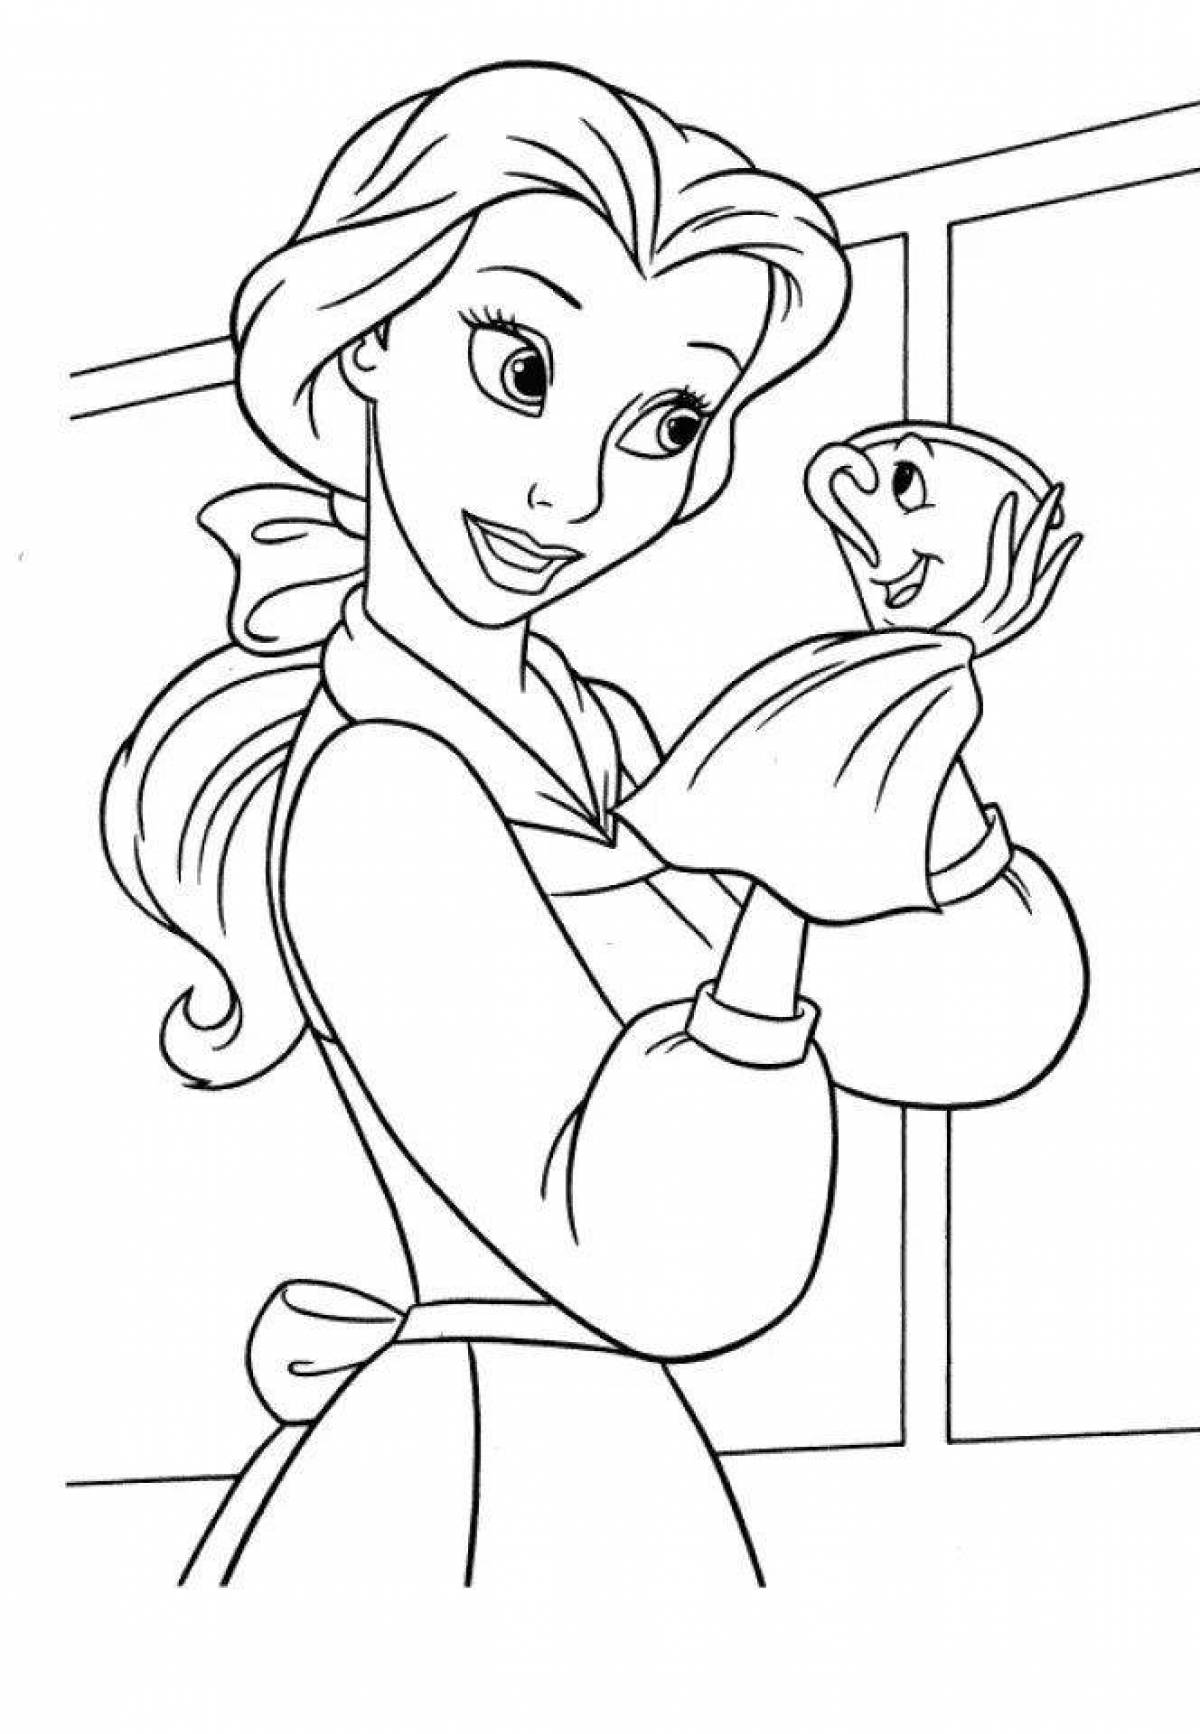 Adorable belle princess coloring page